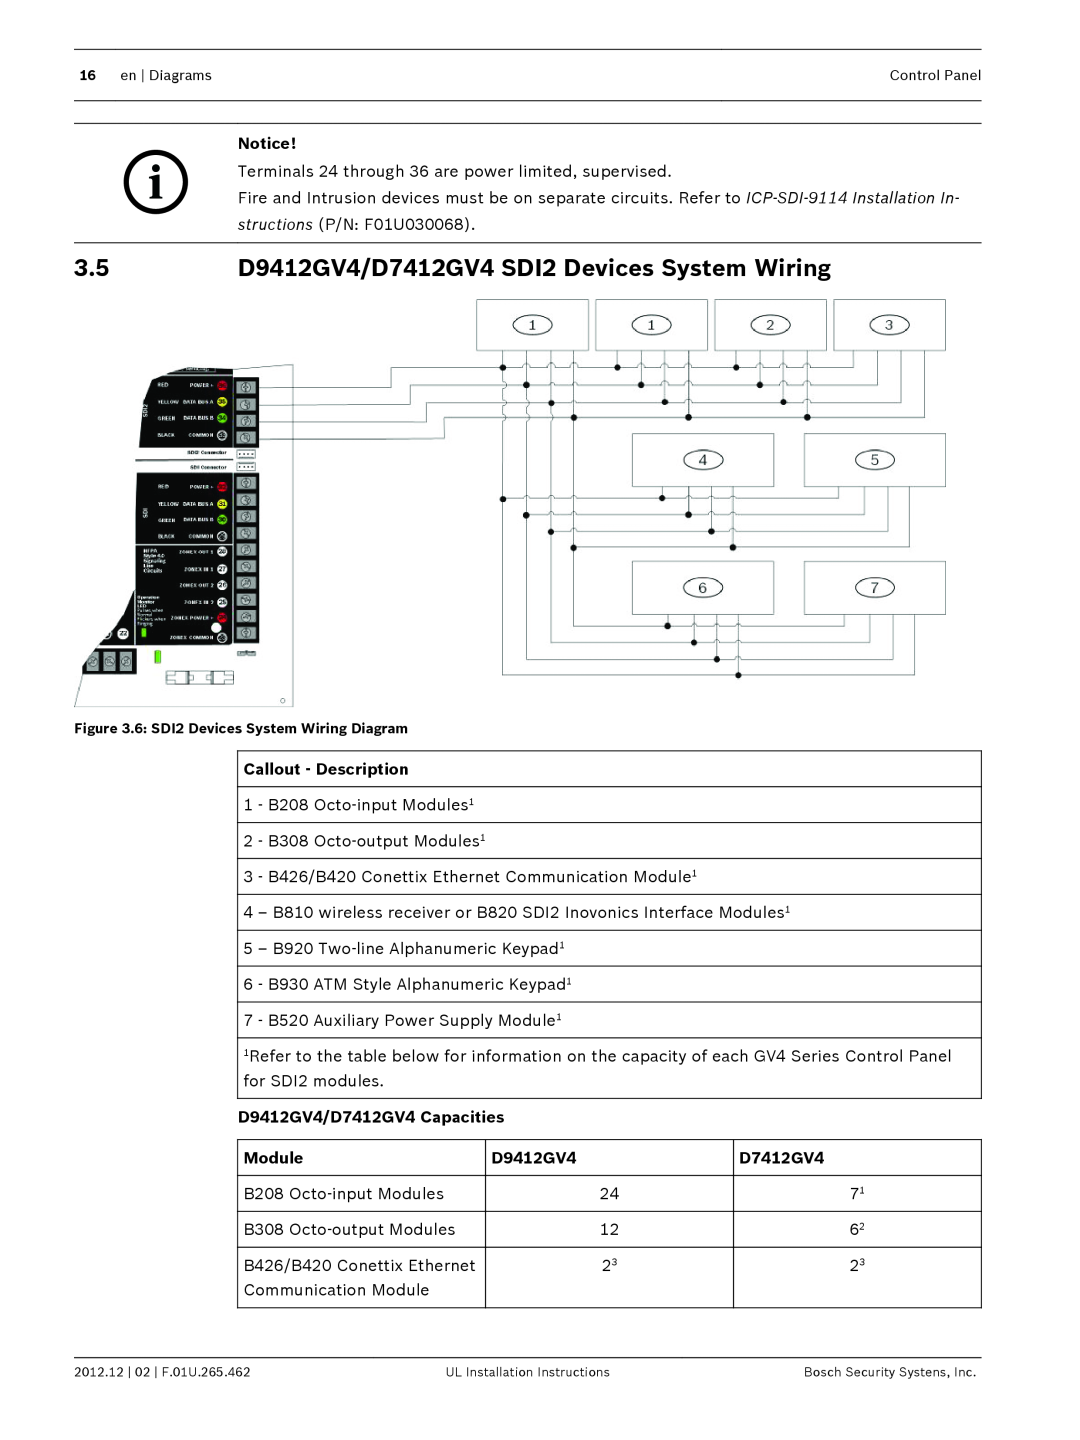 Bosch Appliances D9412GV4/D7412GV4 SDI2 Devices System Wiring, Callout - Description, D9412GV4/D7412GV4 Capacities 